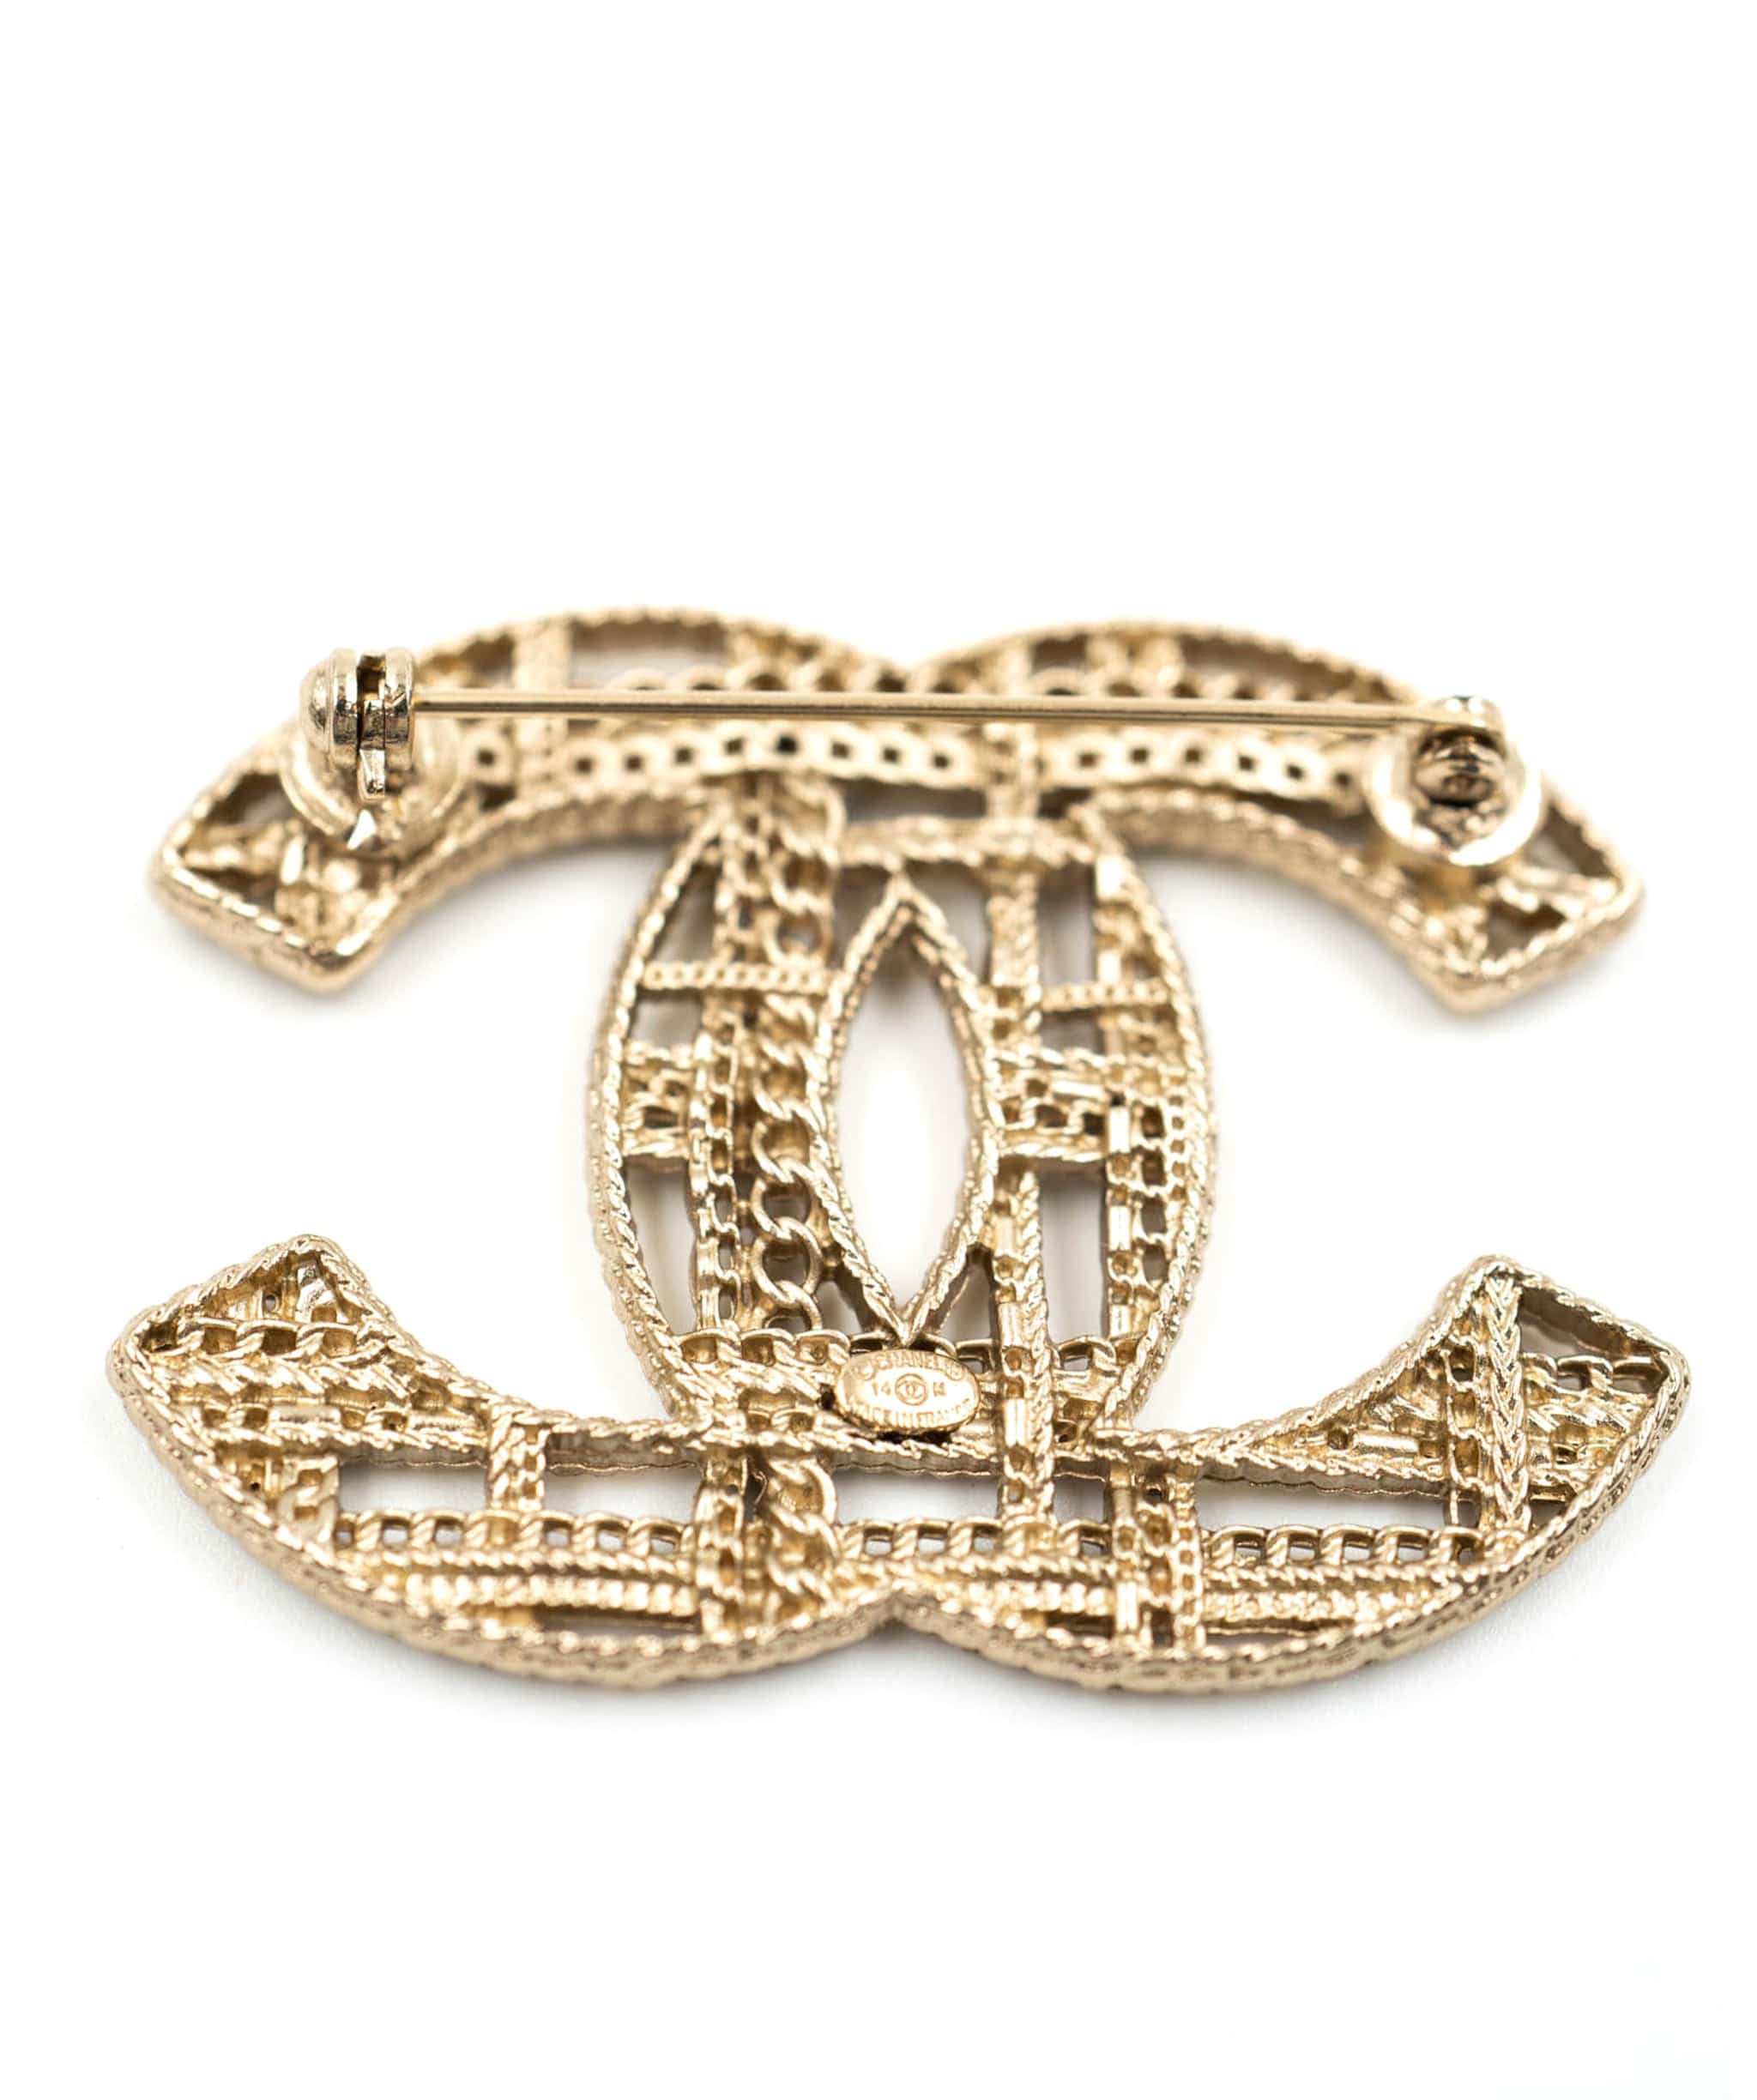 Chanel Chanel cut out CC brooch - AWL3761